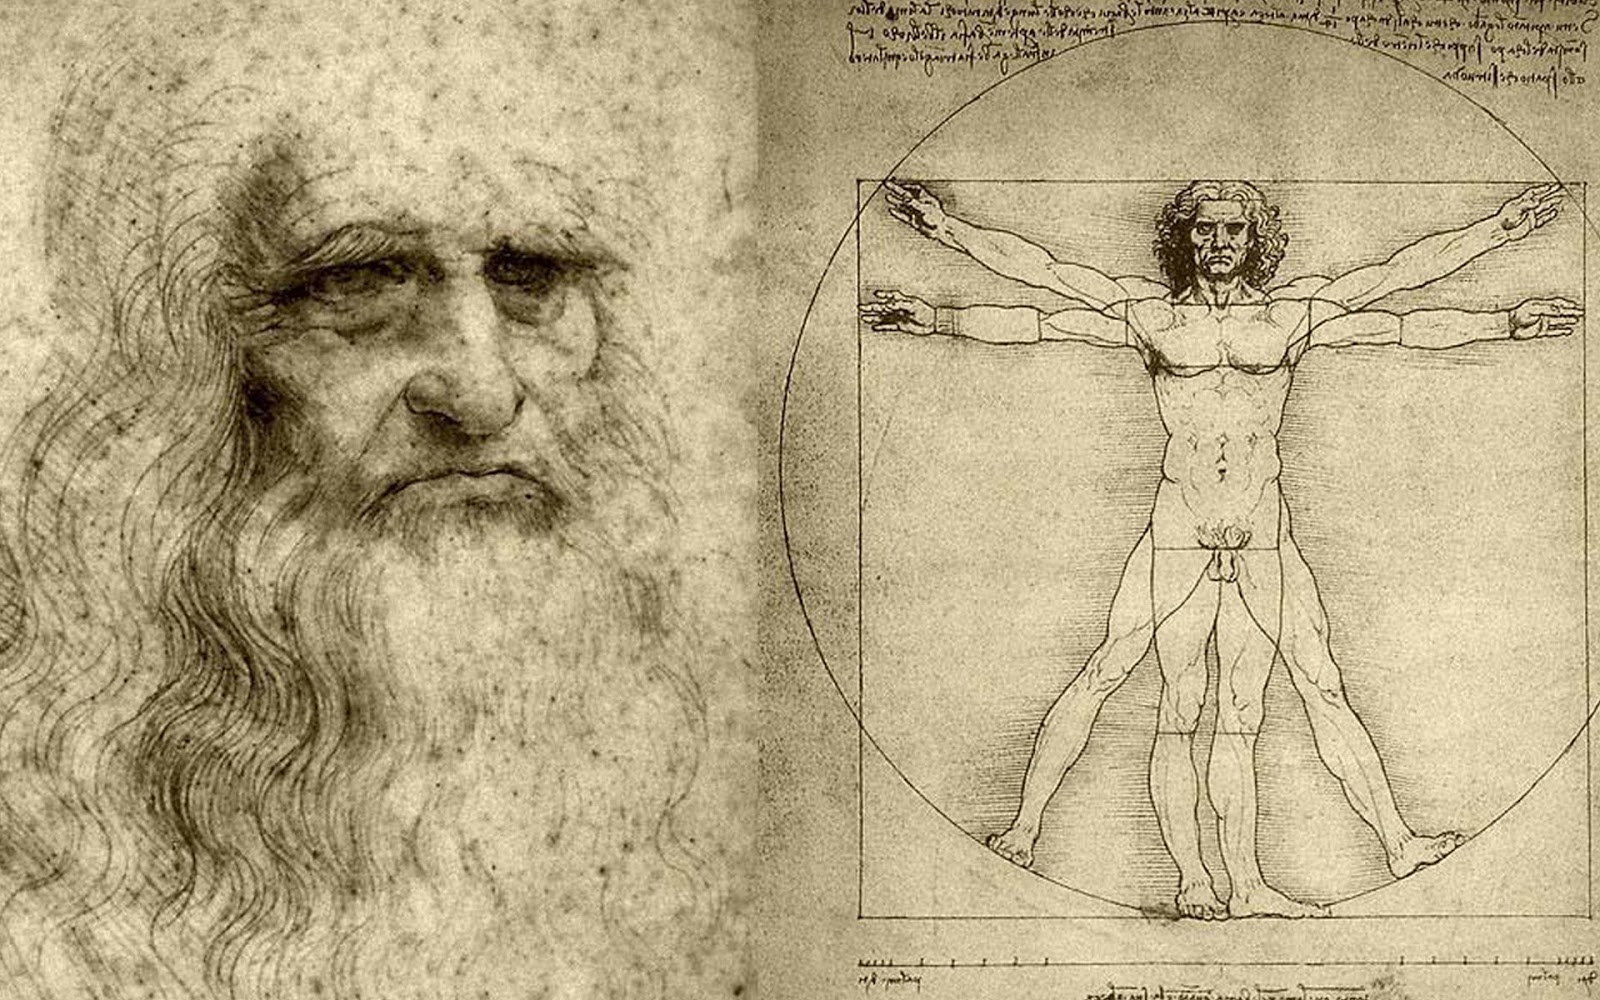 Leonardo+da+Vinci-1452-1519 (954).jpg